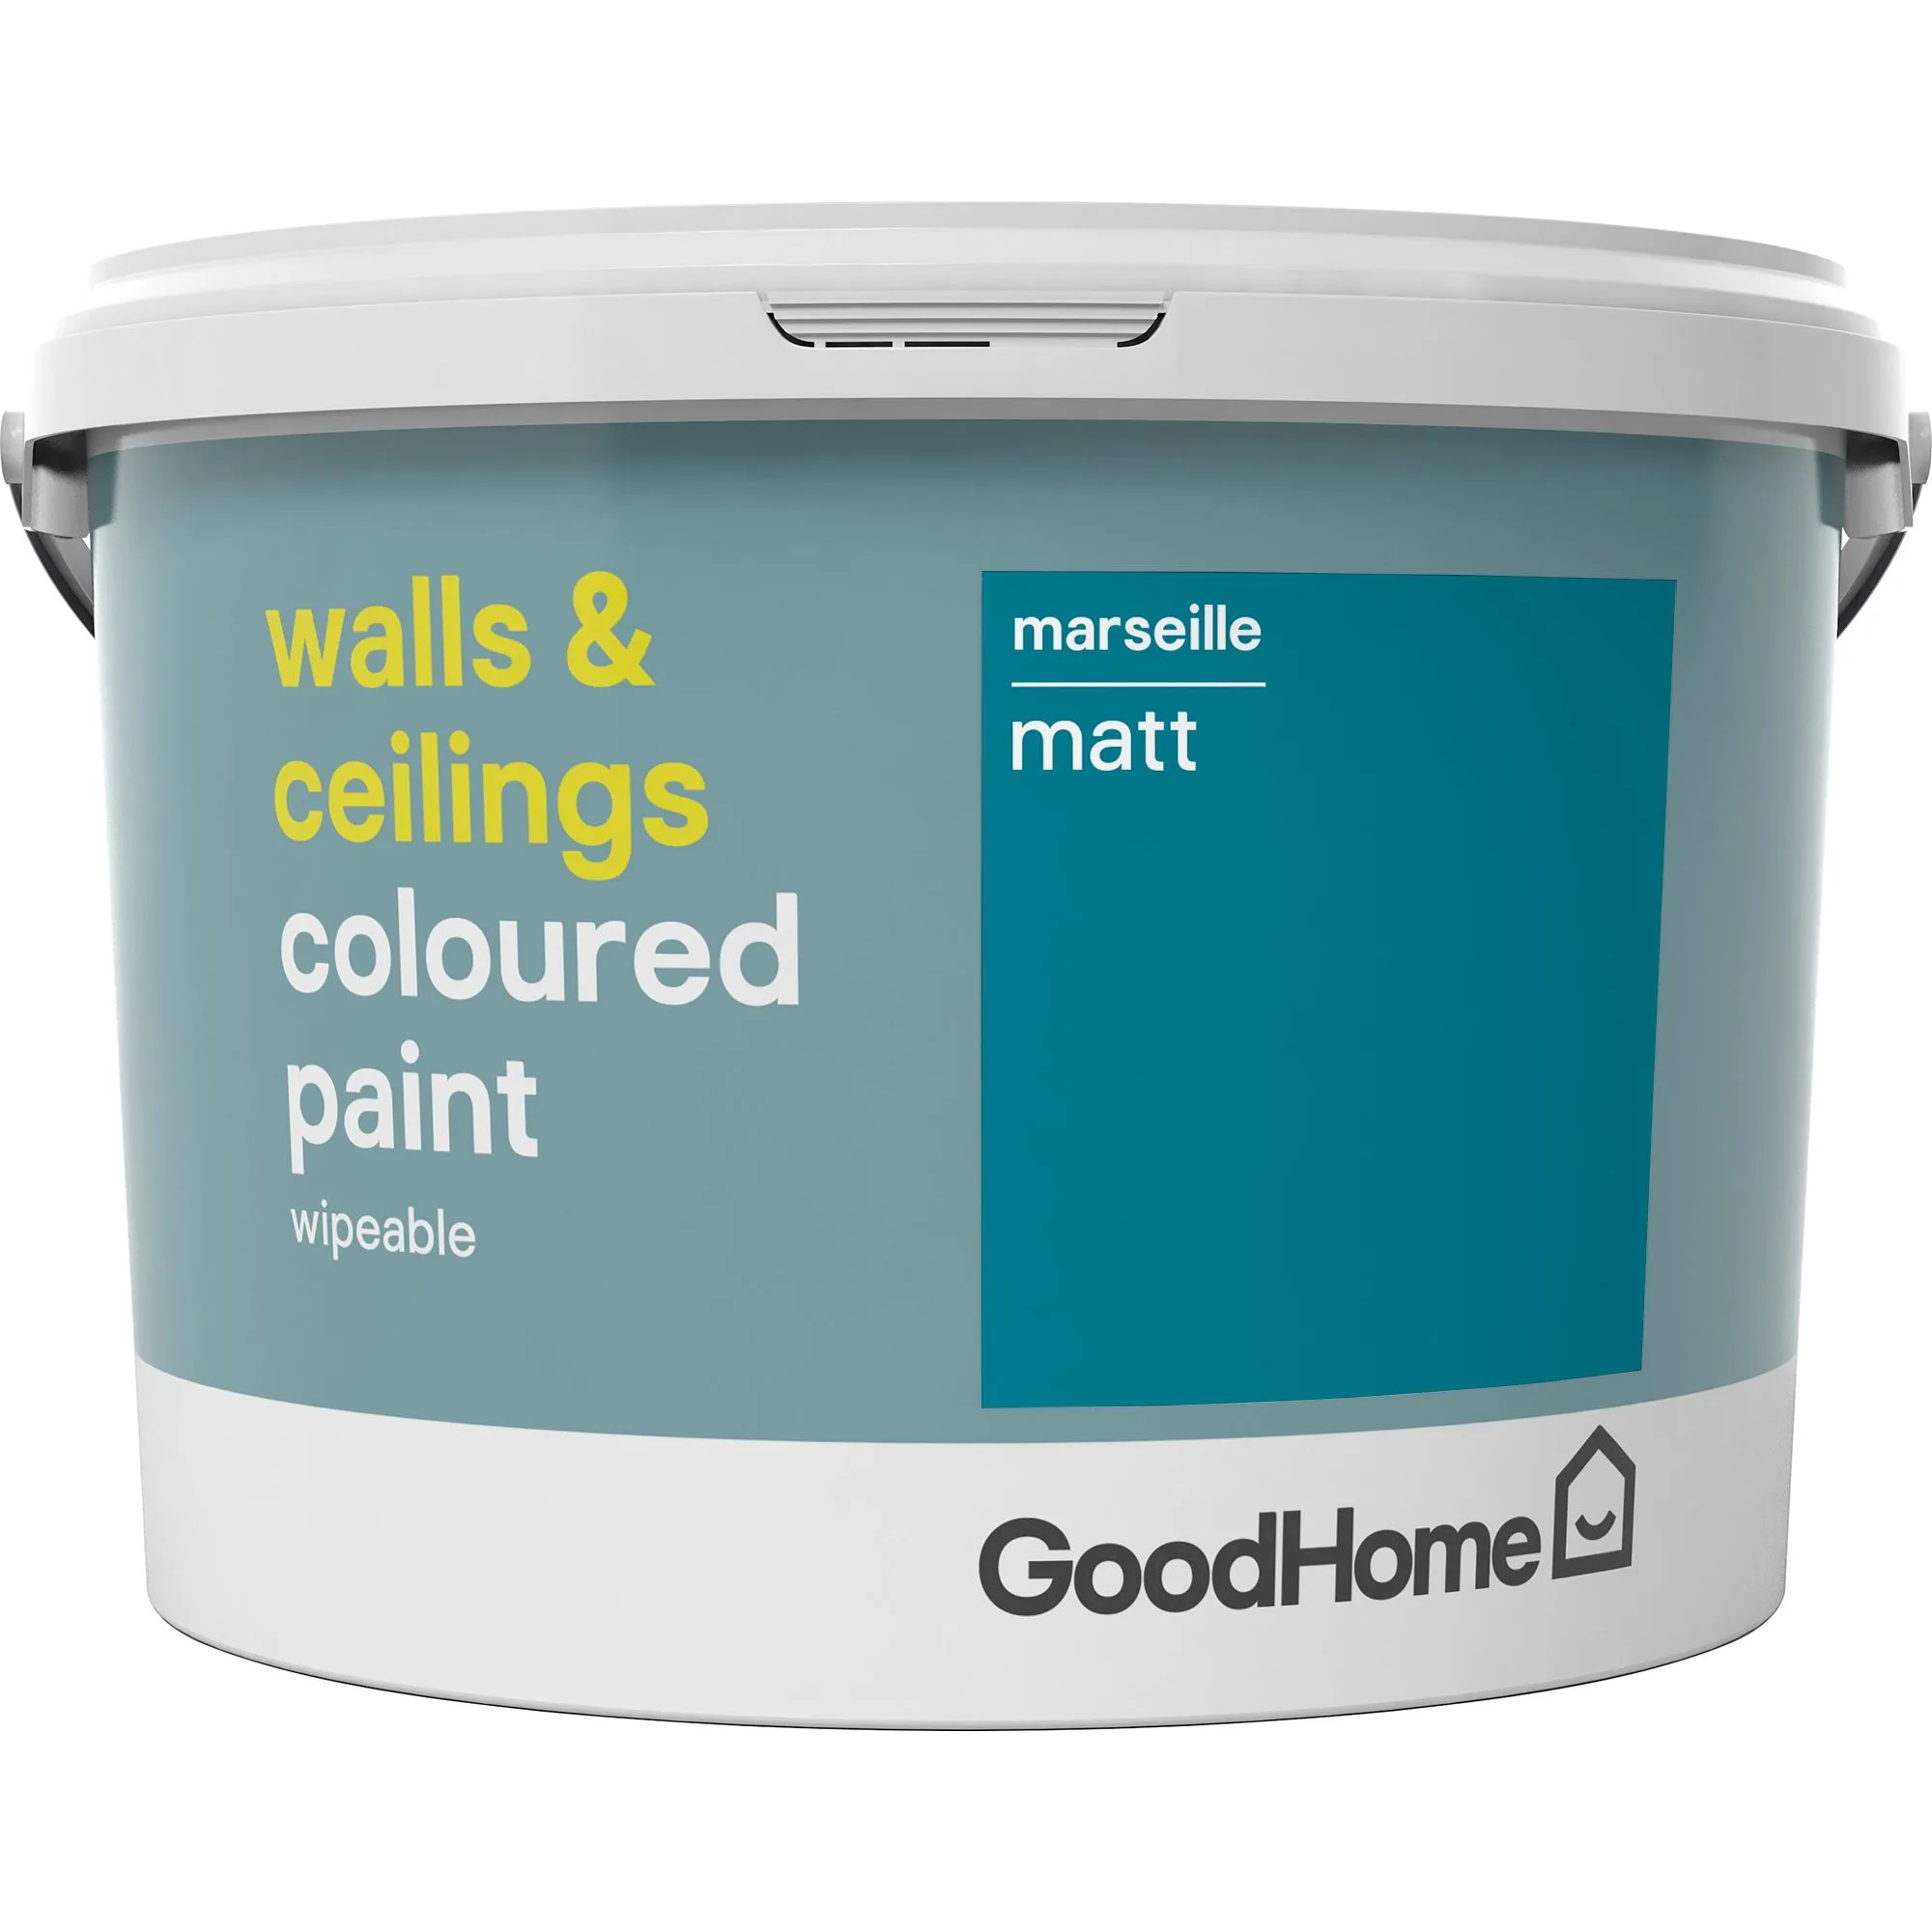 GoodHome Walls & ceilings Marseille Matt Emulsion paint, 2.5L